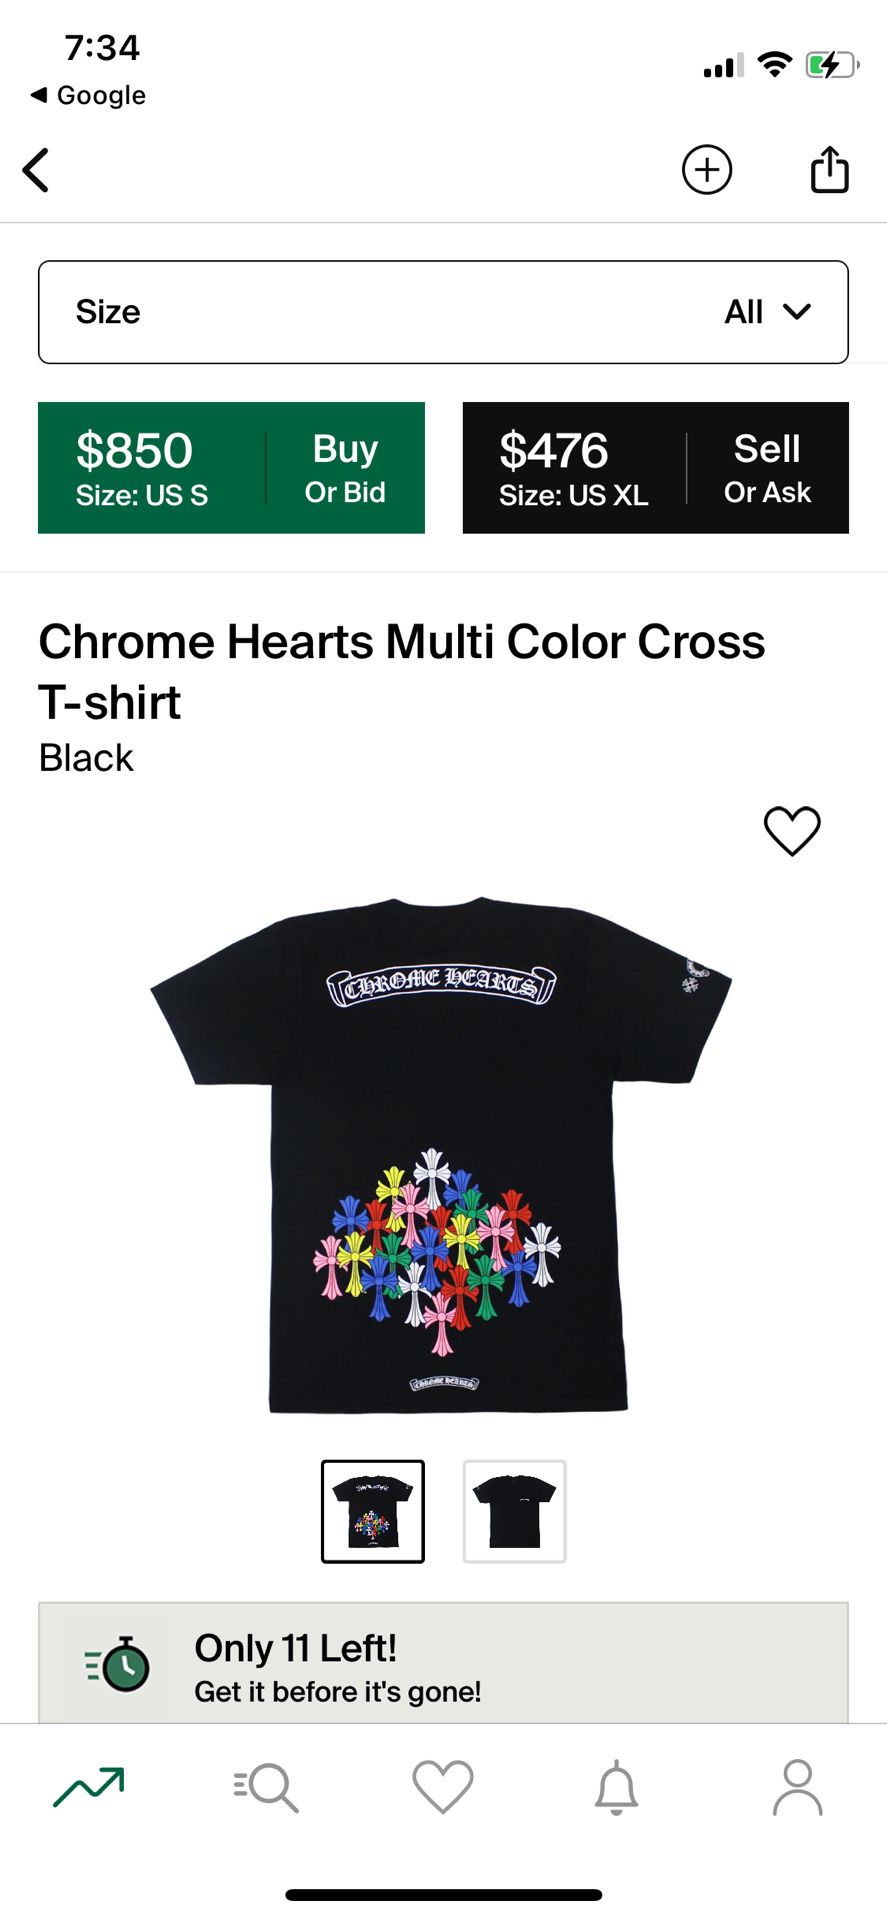 chromehearts multi color cross tee black